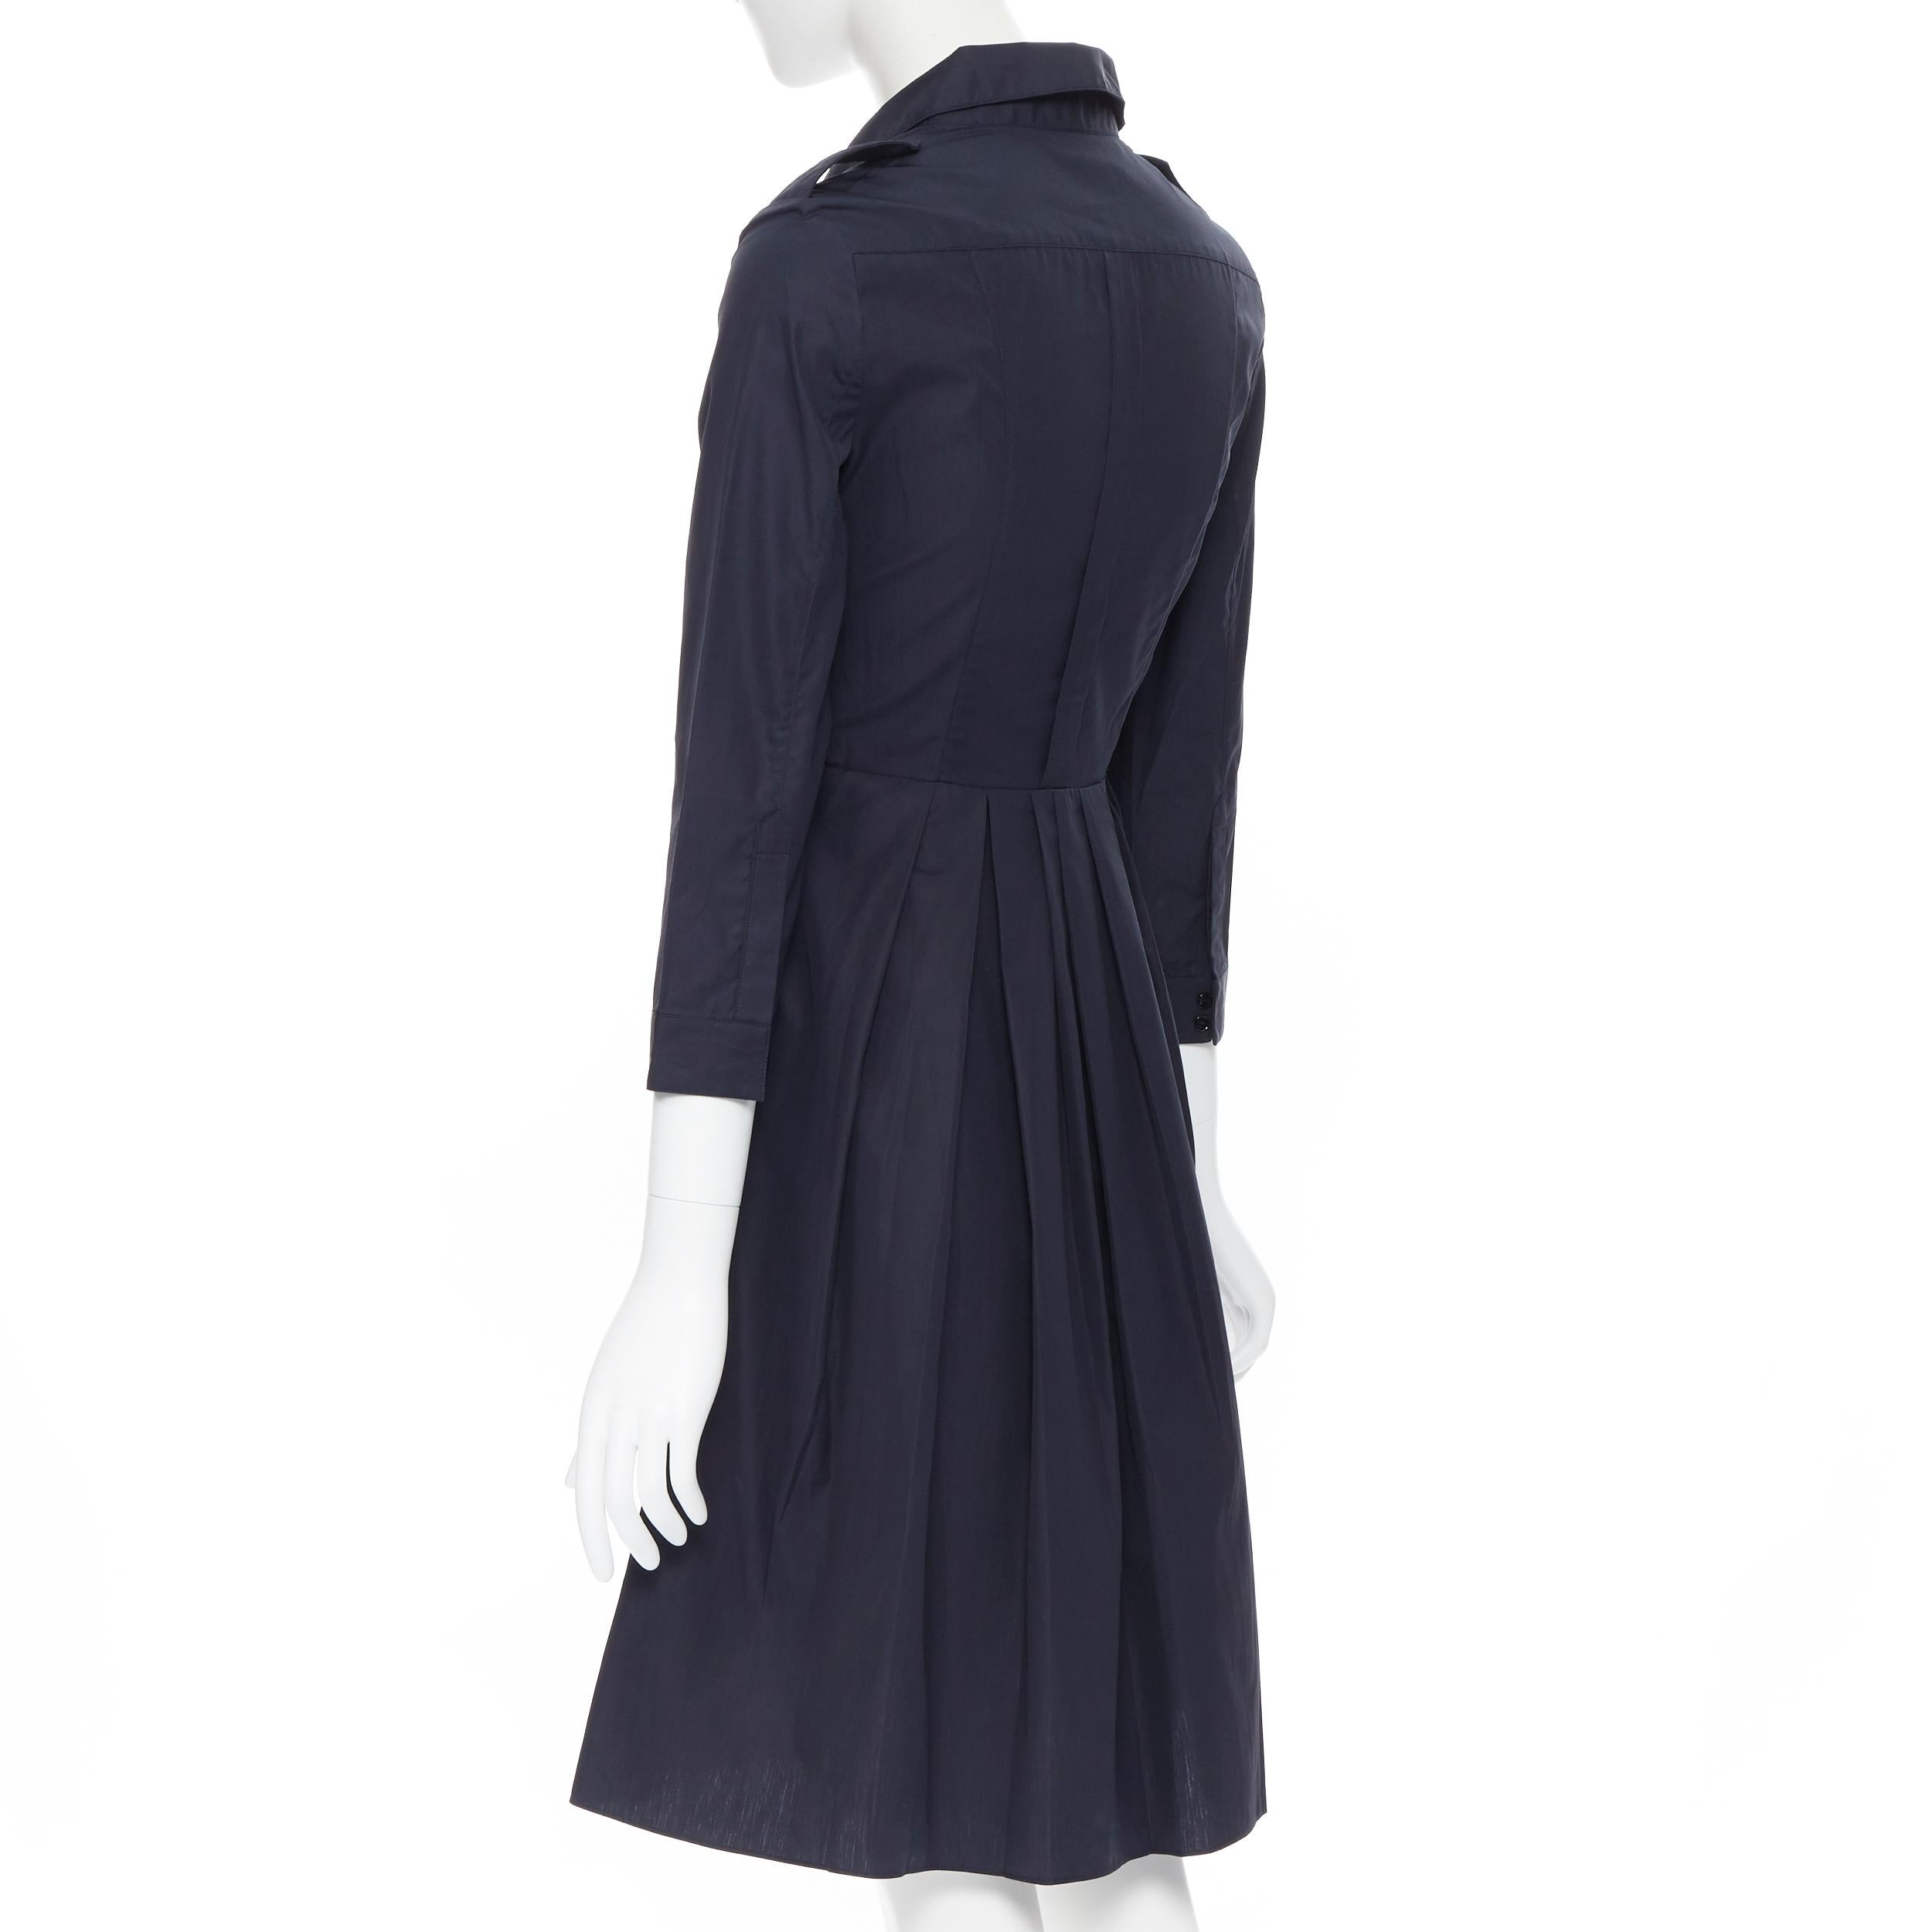 Black BURBERRY navy blue cotton pleated skirt safari detail flared dress UK4 XS